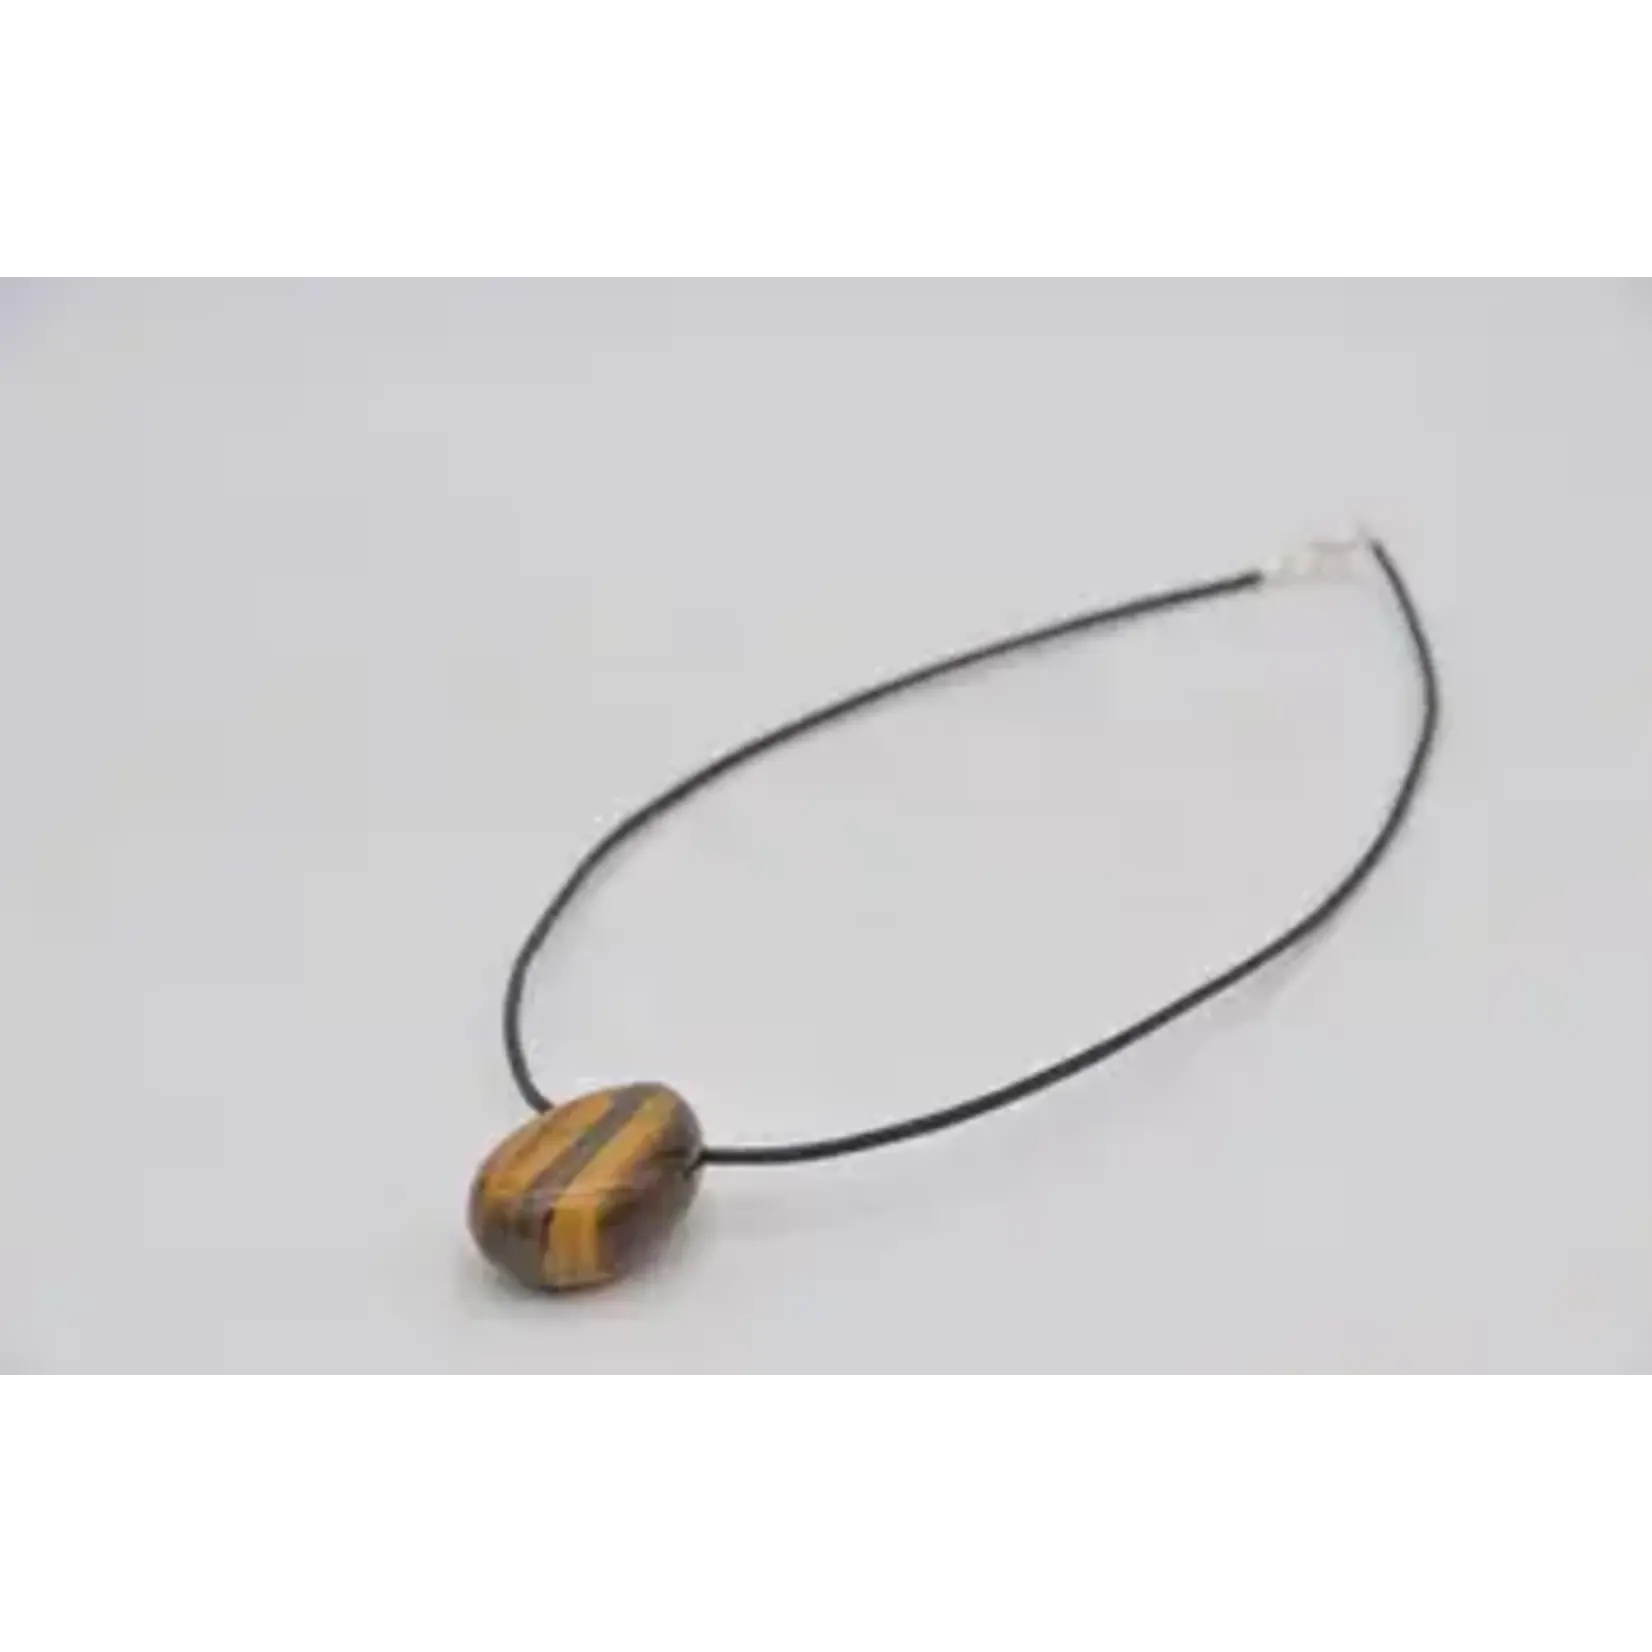 Lederen halsketting met verzilverd karabijnslotje bruin -- 45 cm